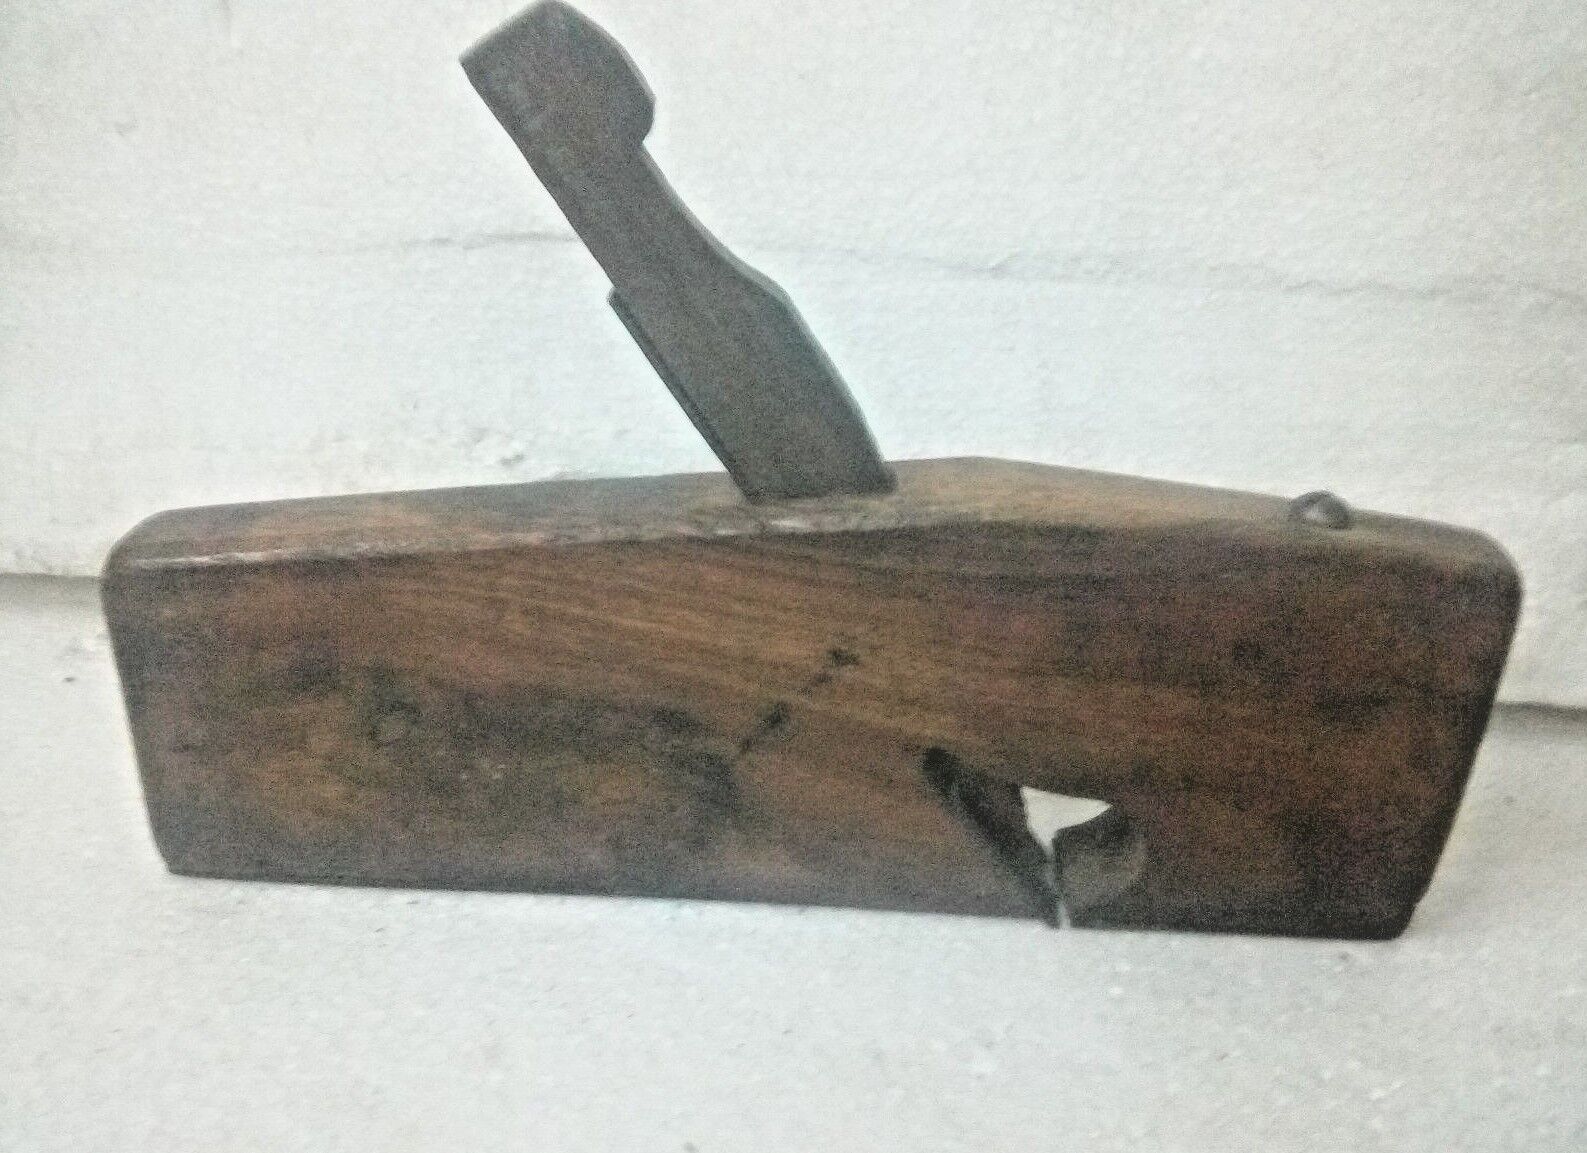 Antique Complex Molding Plane Wood Working Carpenters Tool Wooden Metal Blade